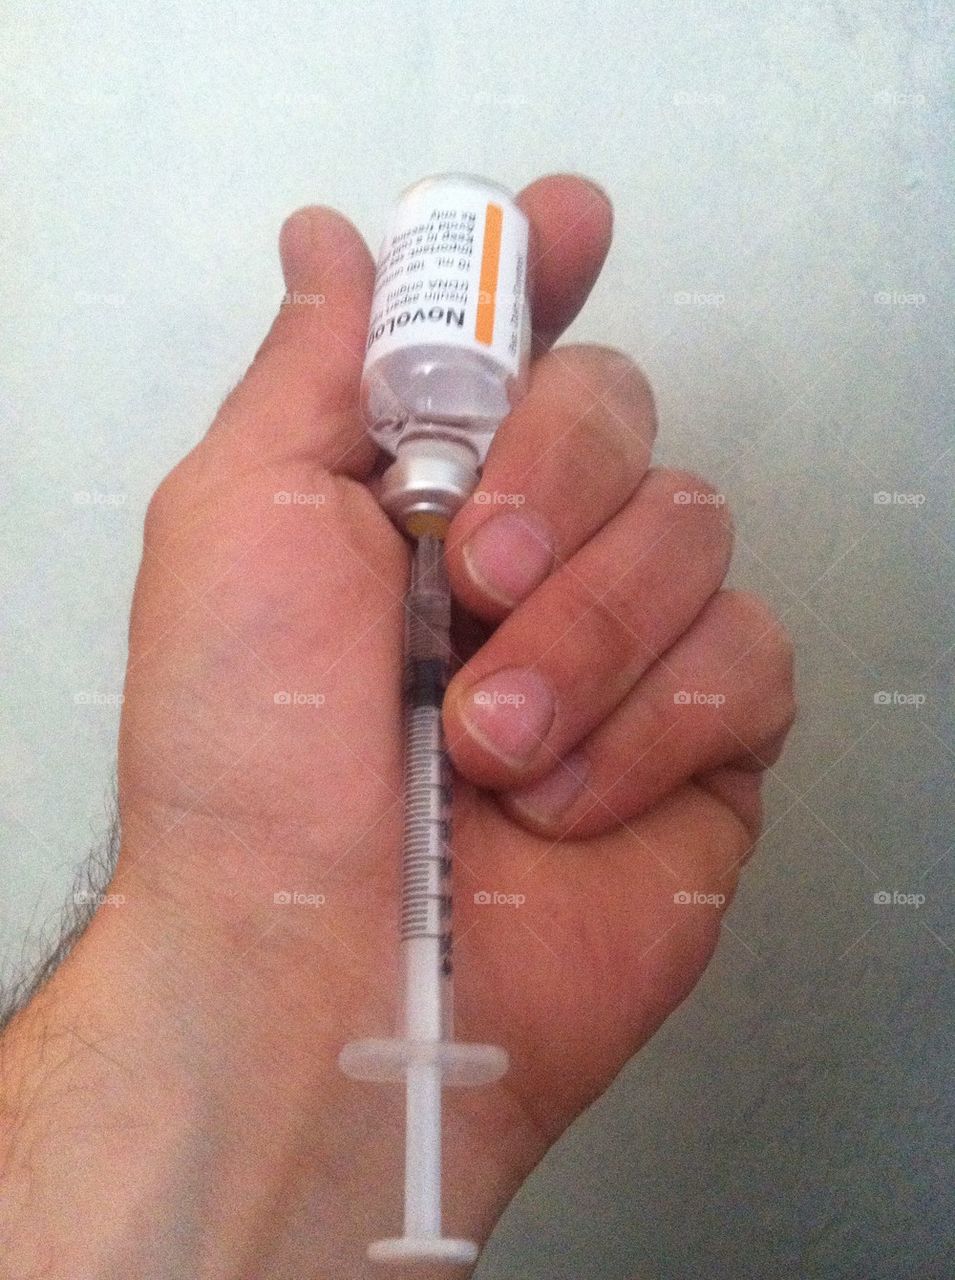 Insulin injection prep